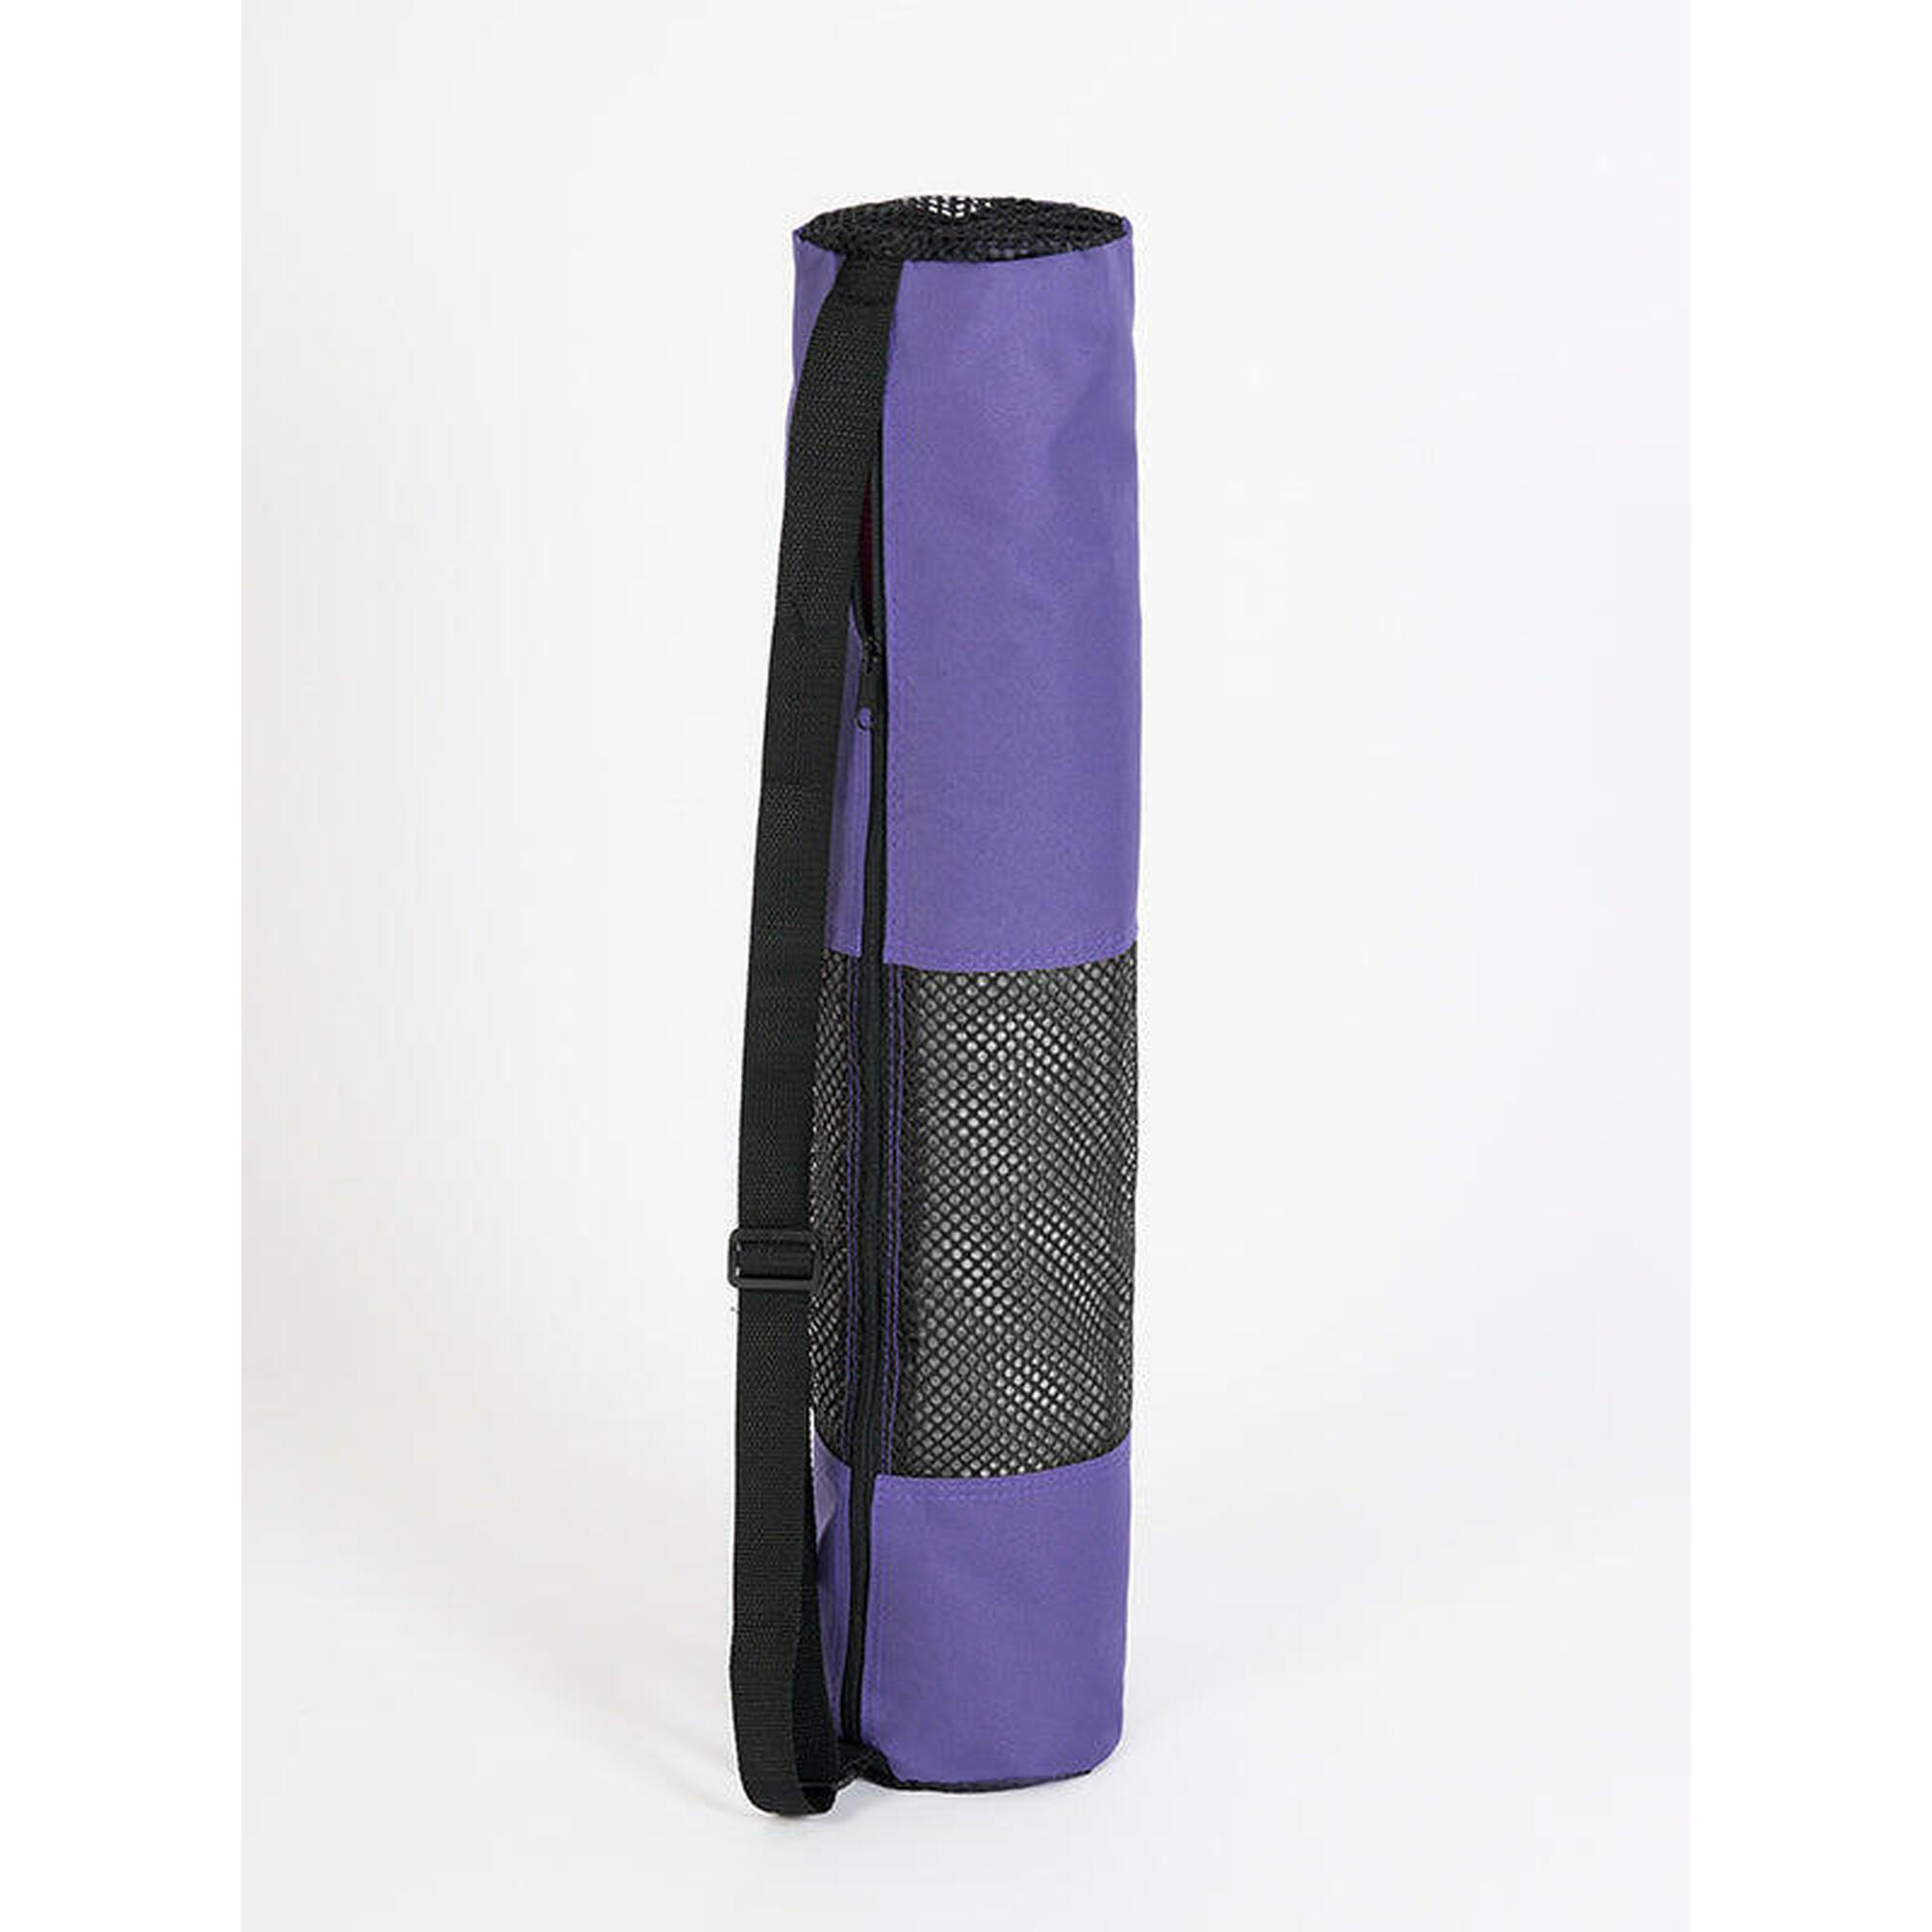 YOGA STUDIO Yoga Studio Lightweight Yoga Mat Bag - Purple